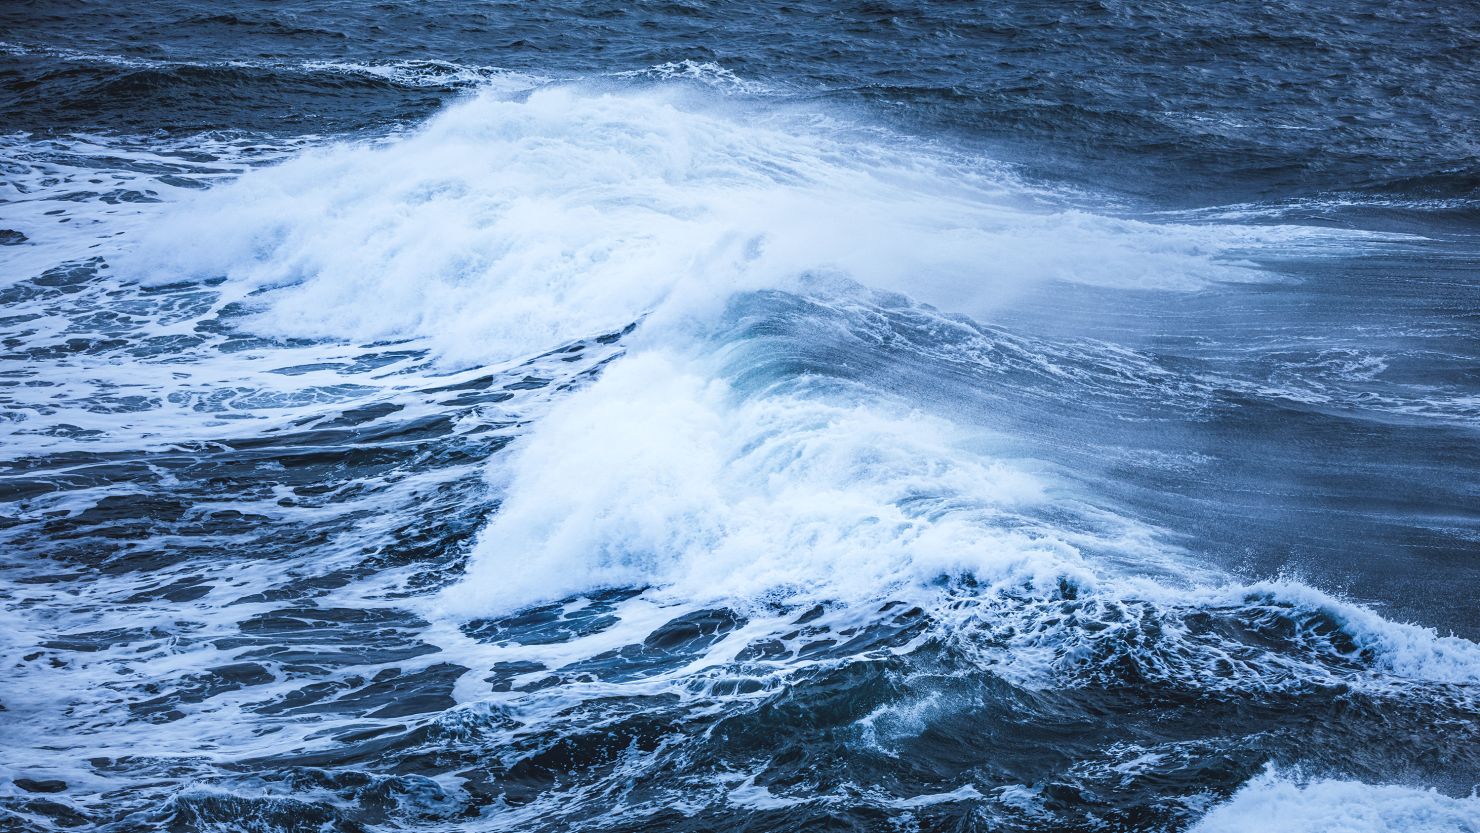 Waves in the North Atlantic Ocean near Gatklettur, Iceland, March 2020.